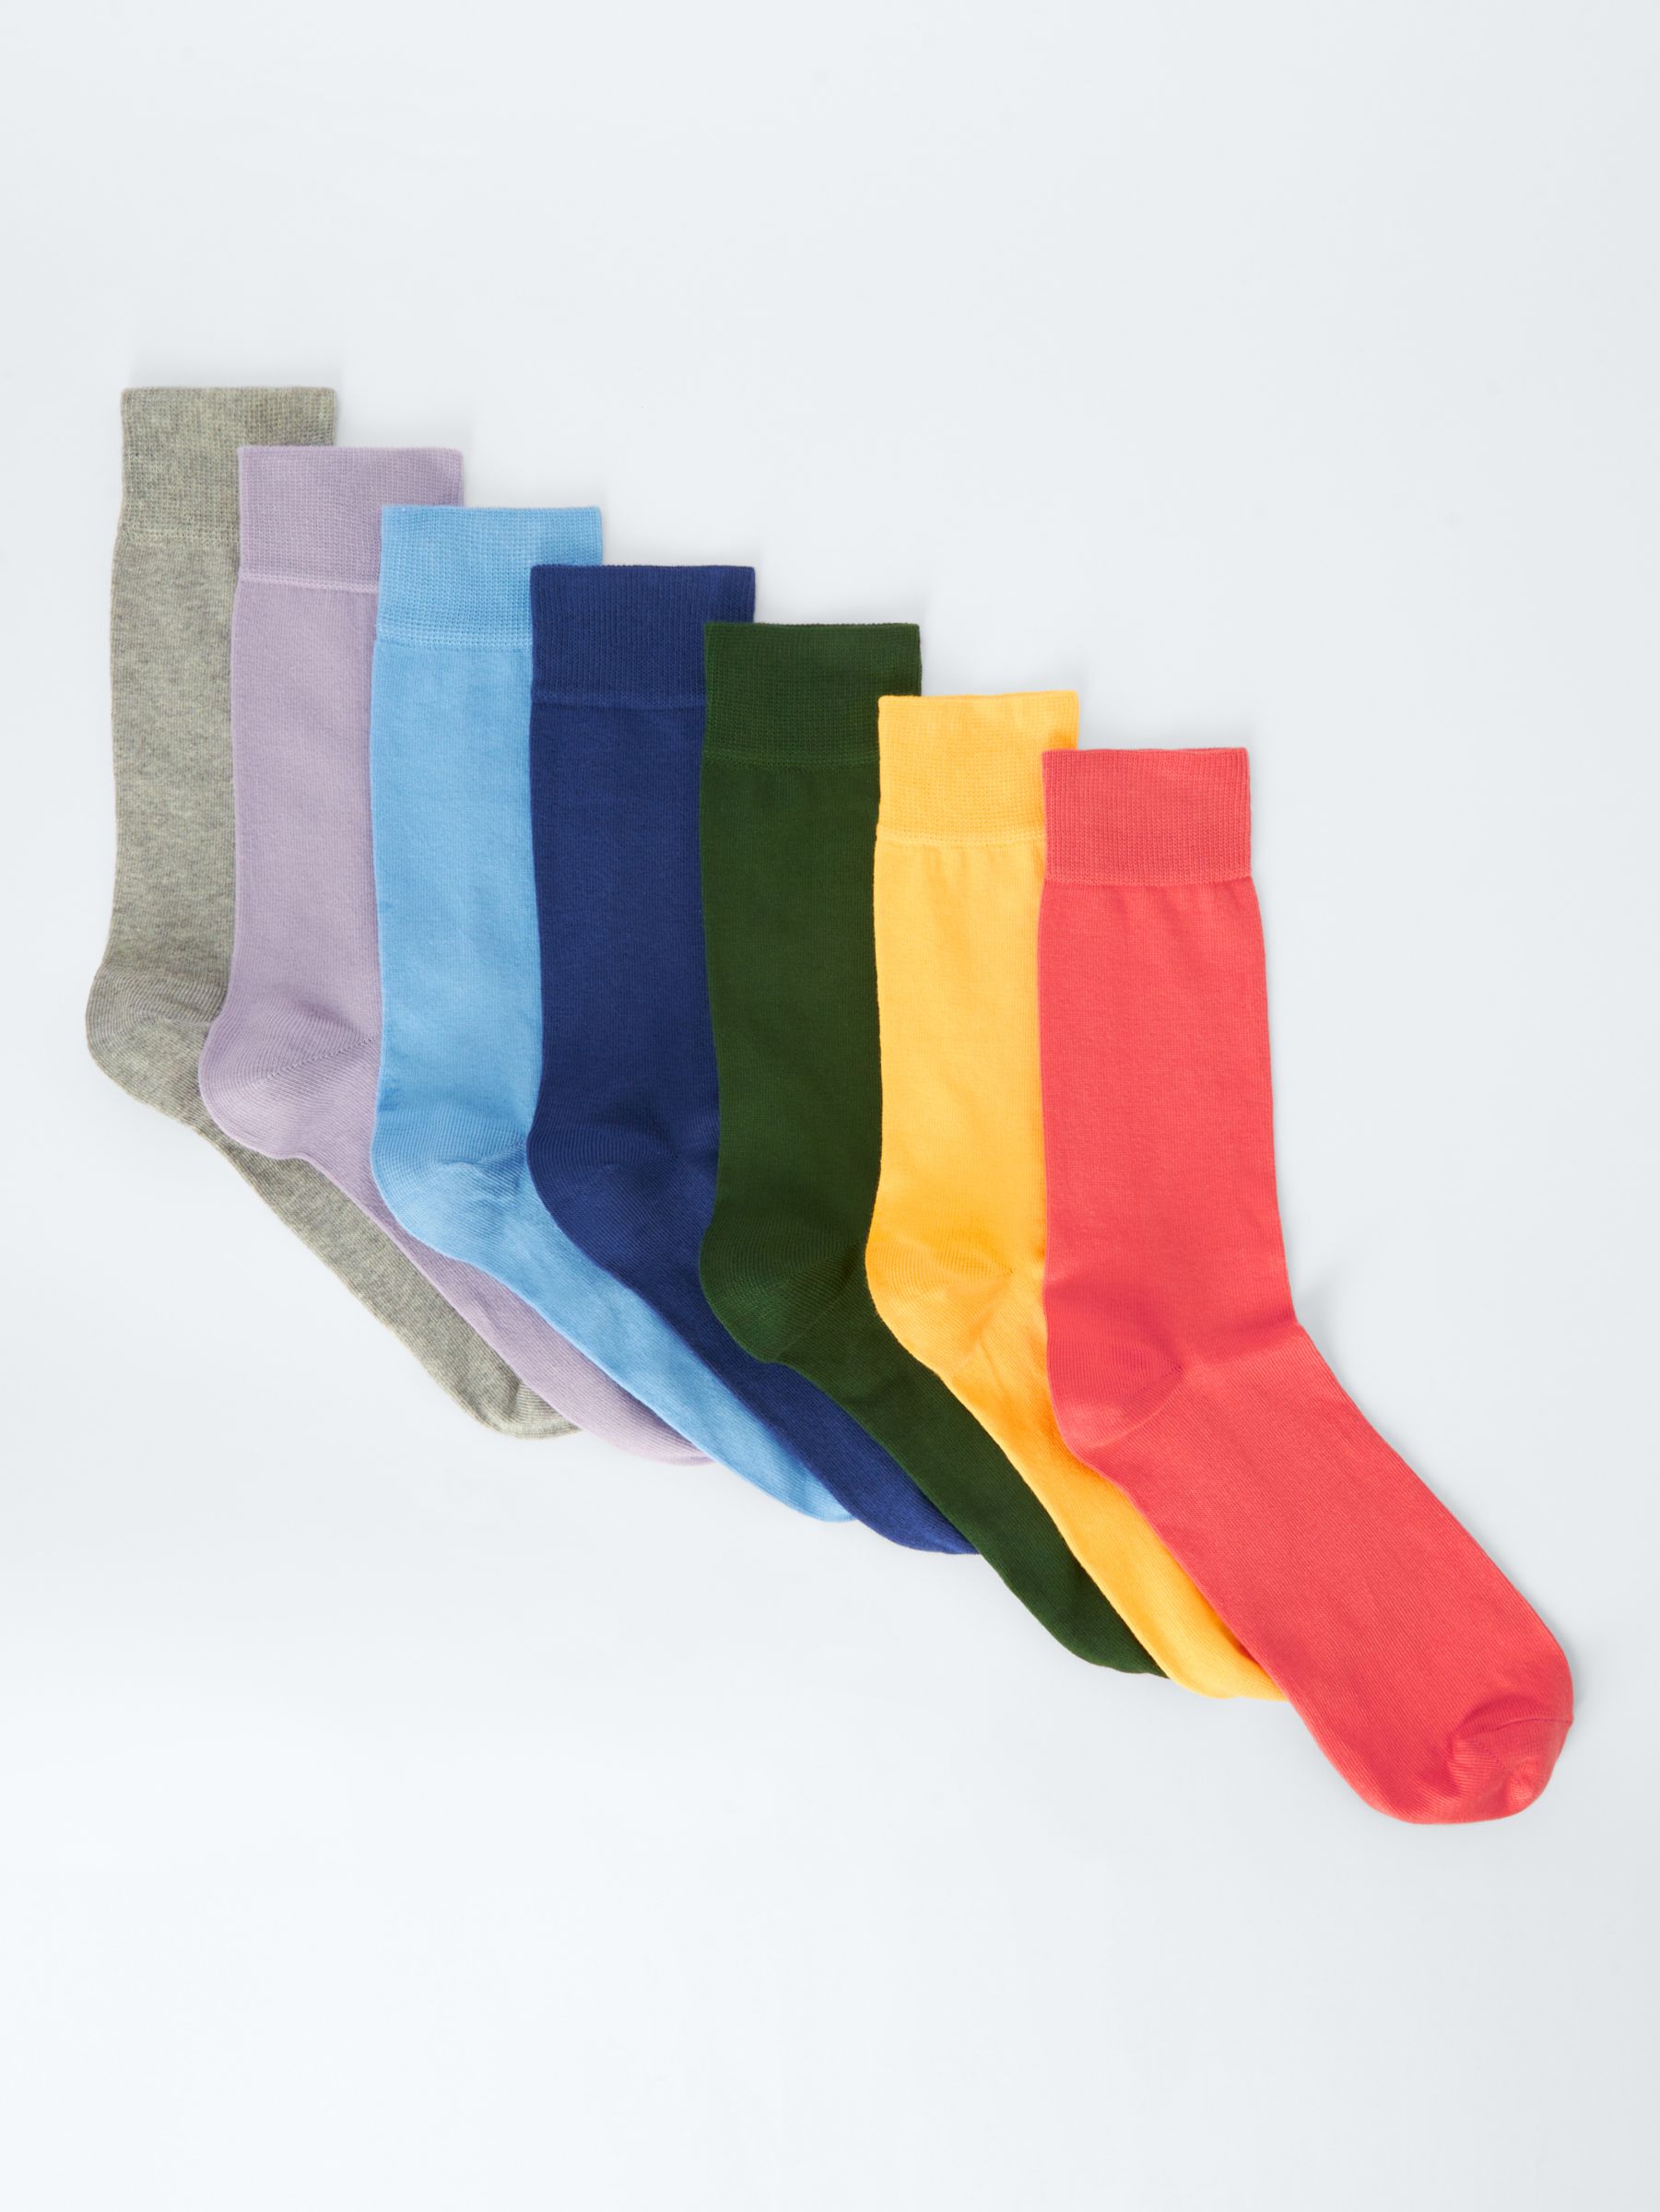 John Lewis ANYDAY Plain Cotton Socks, Pack of 7, Multi, S